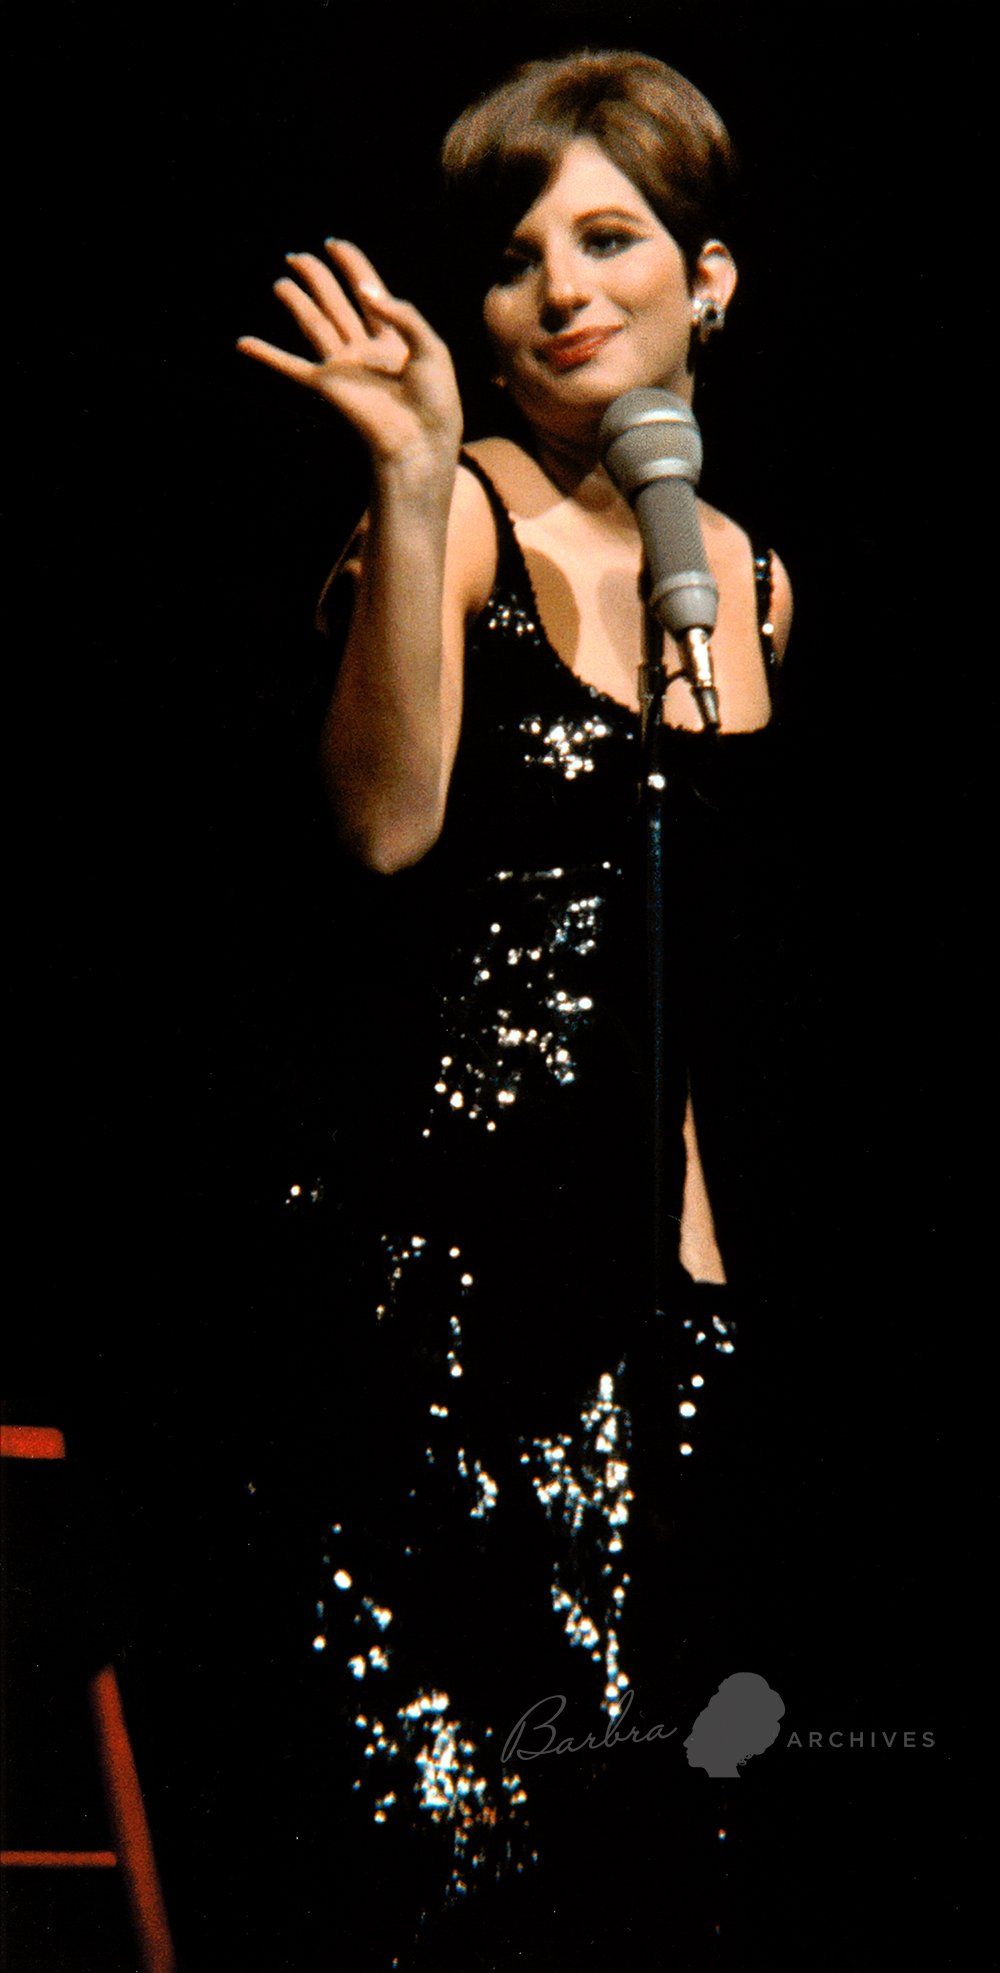 Barbra Streisand in black sparkly dress in concert in 1966